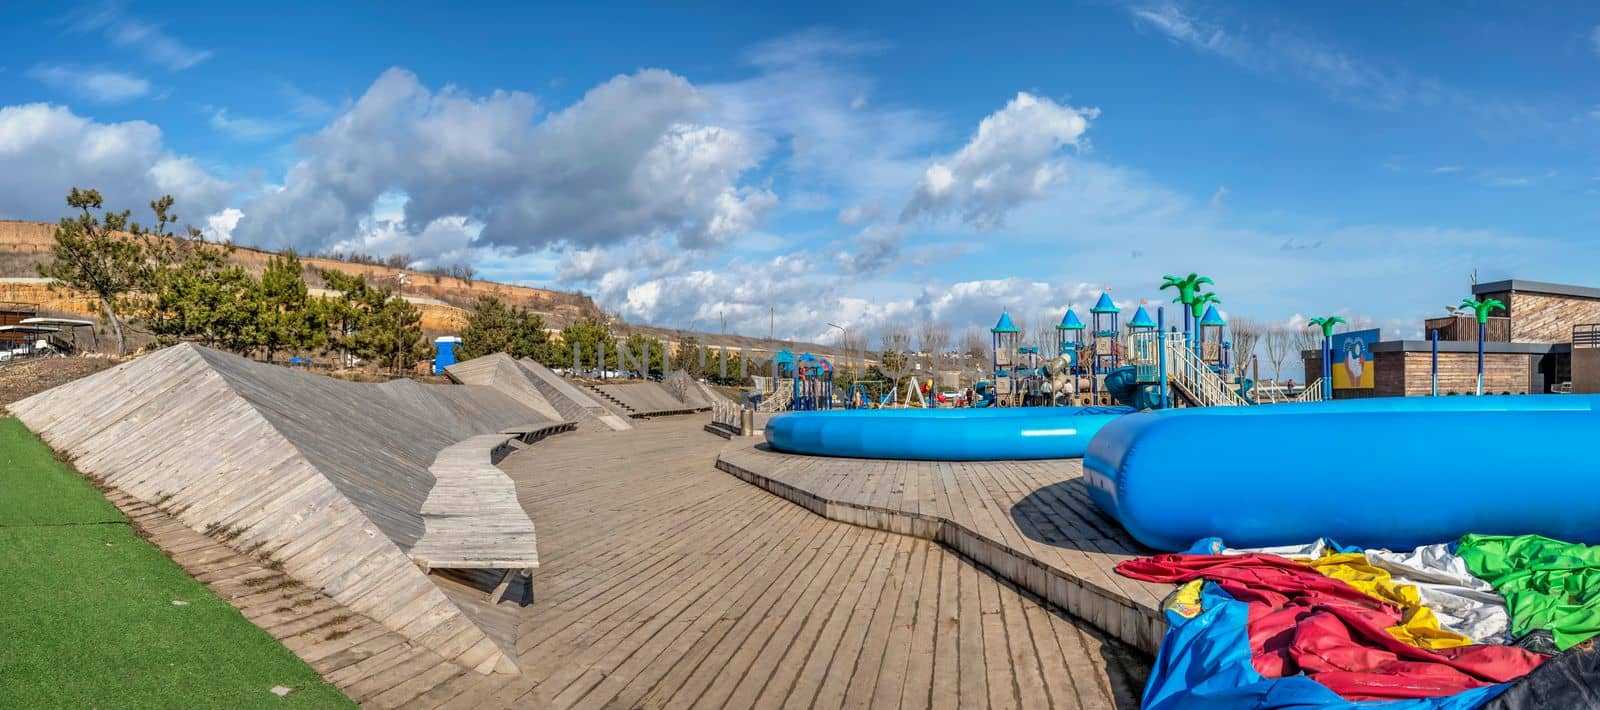 Playground in Fontanka beach in Odessa, Ukraine by Multipedia